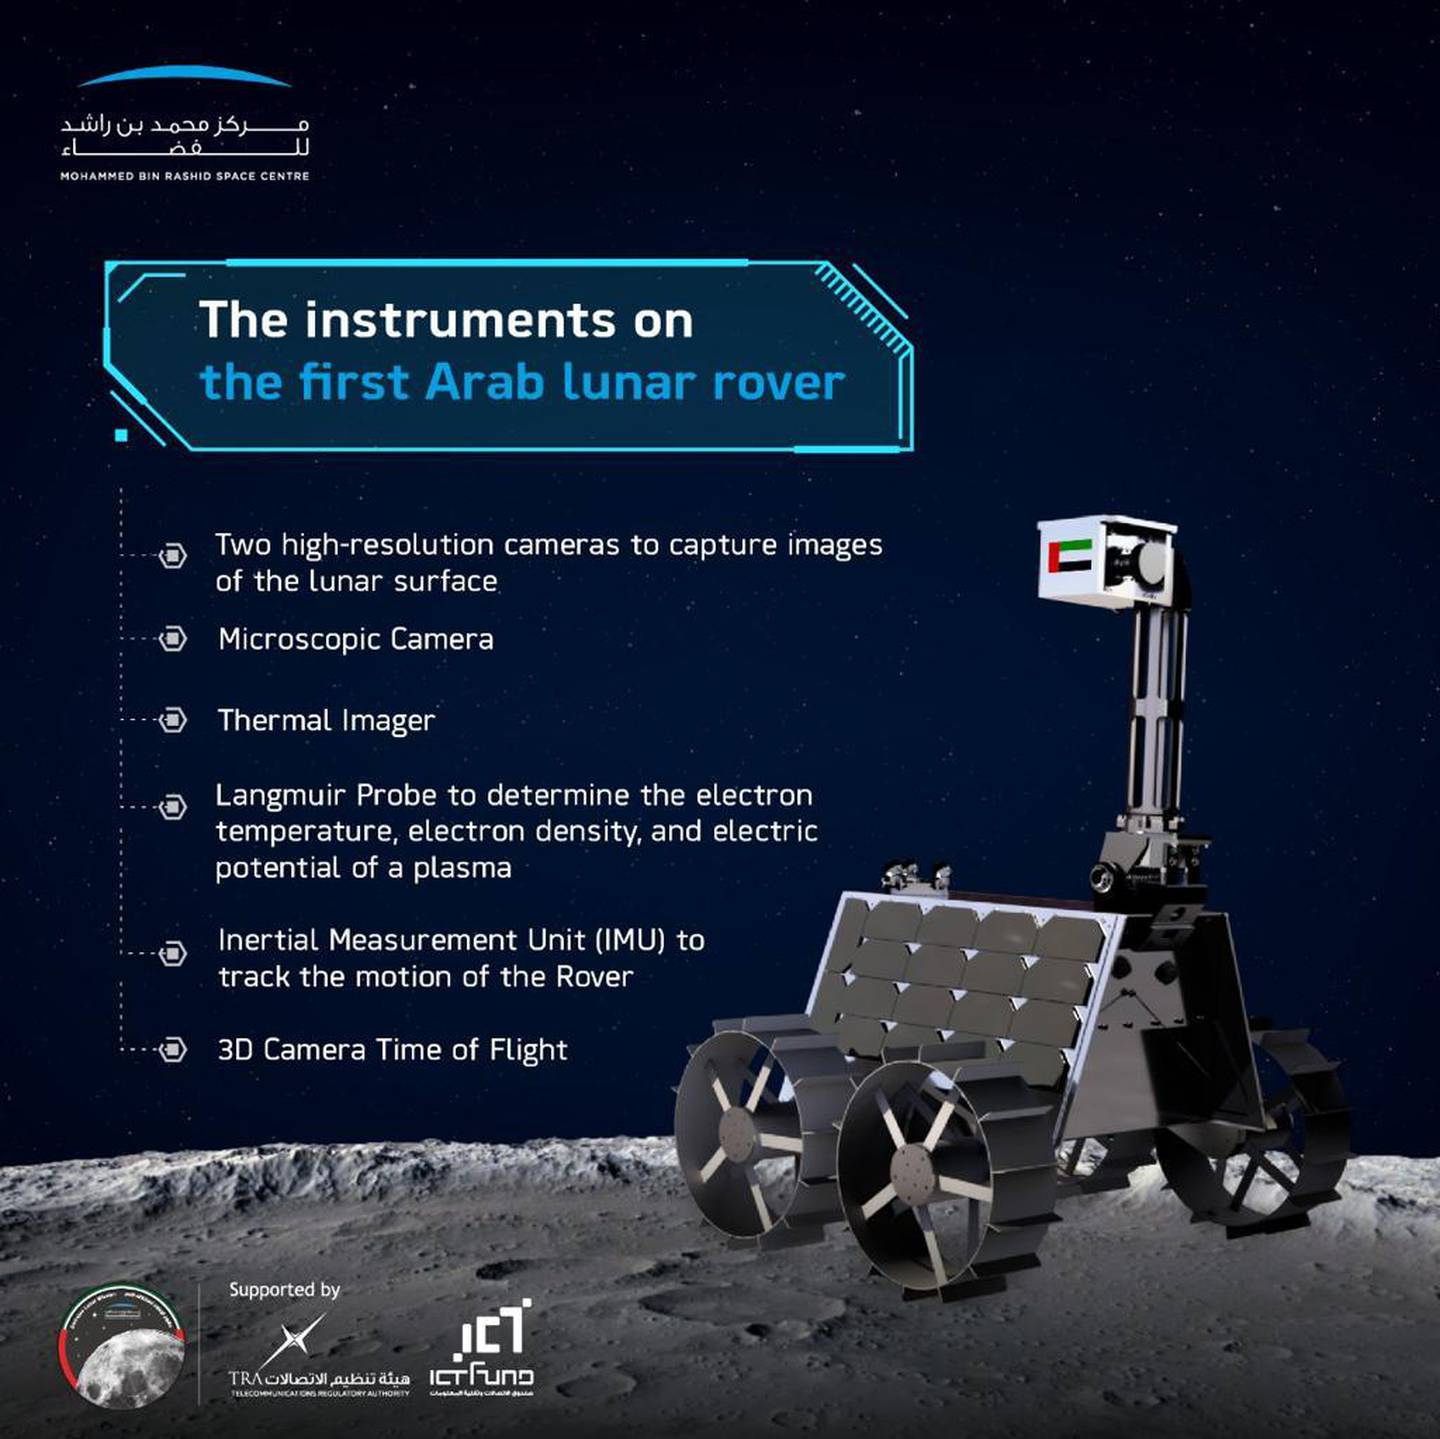 The Arab lunar rover. Source: MBRSC 